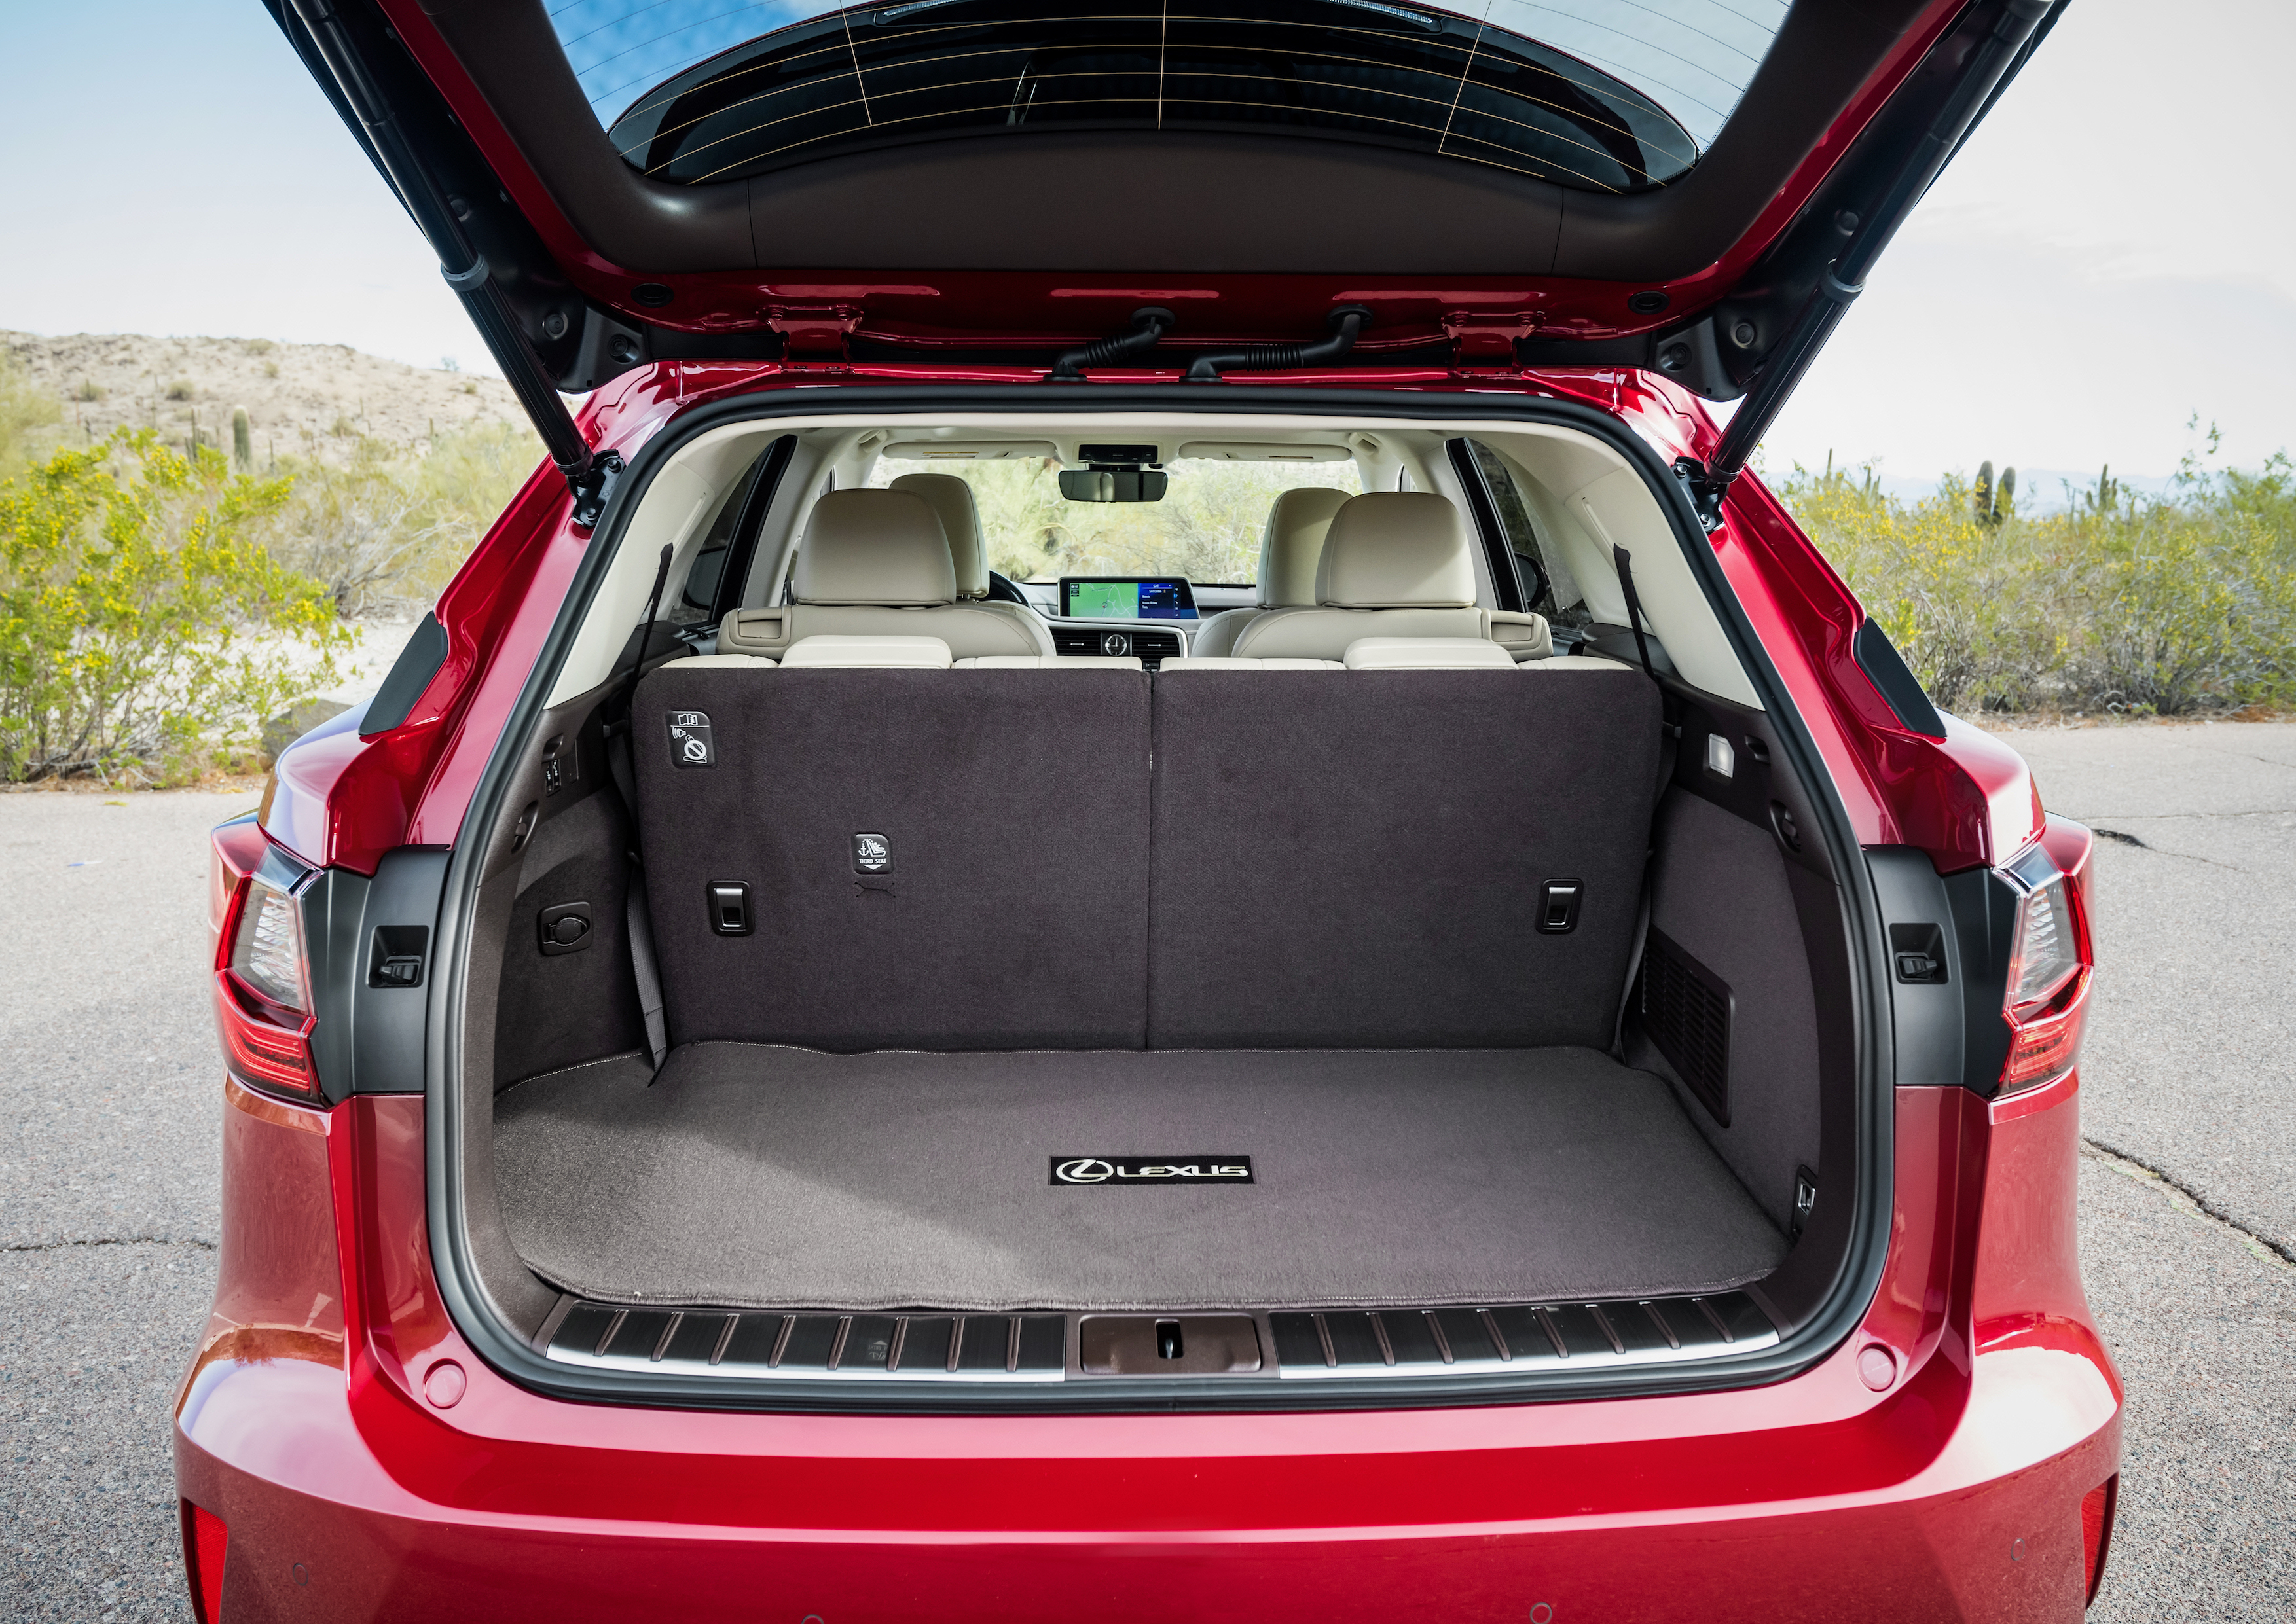 Lexus RX interior specifications